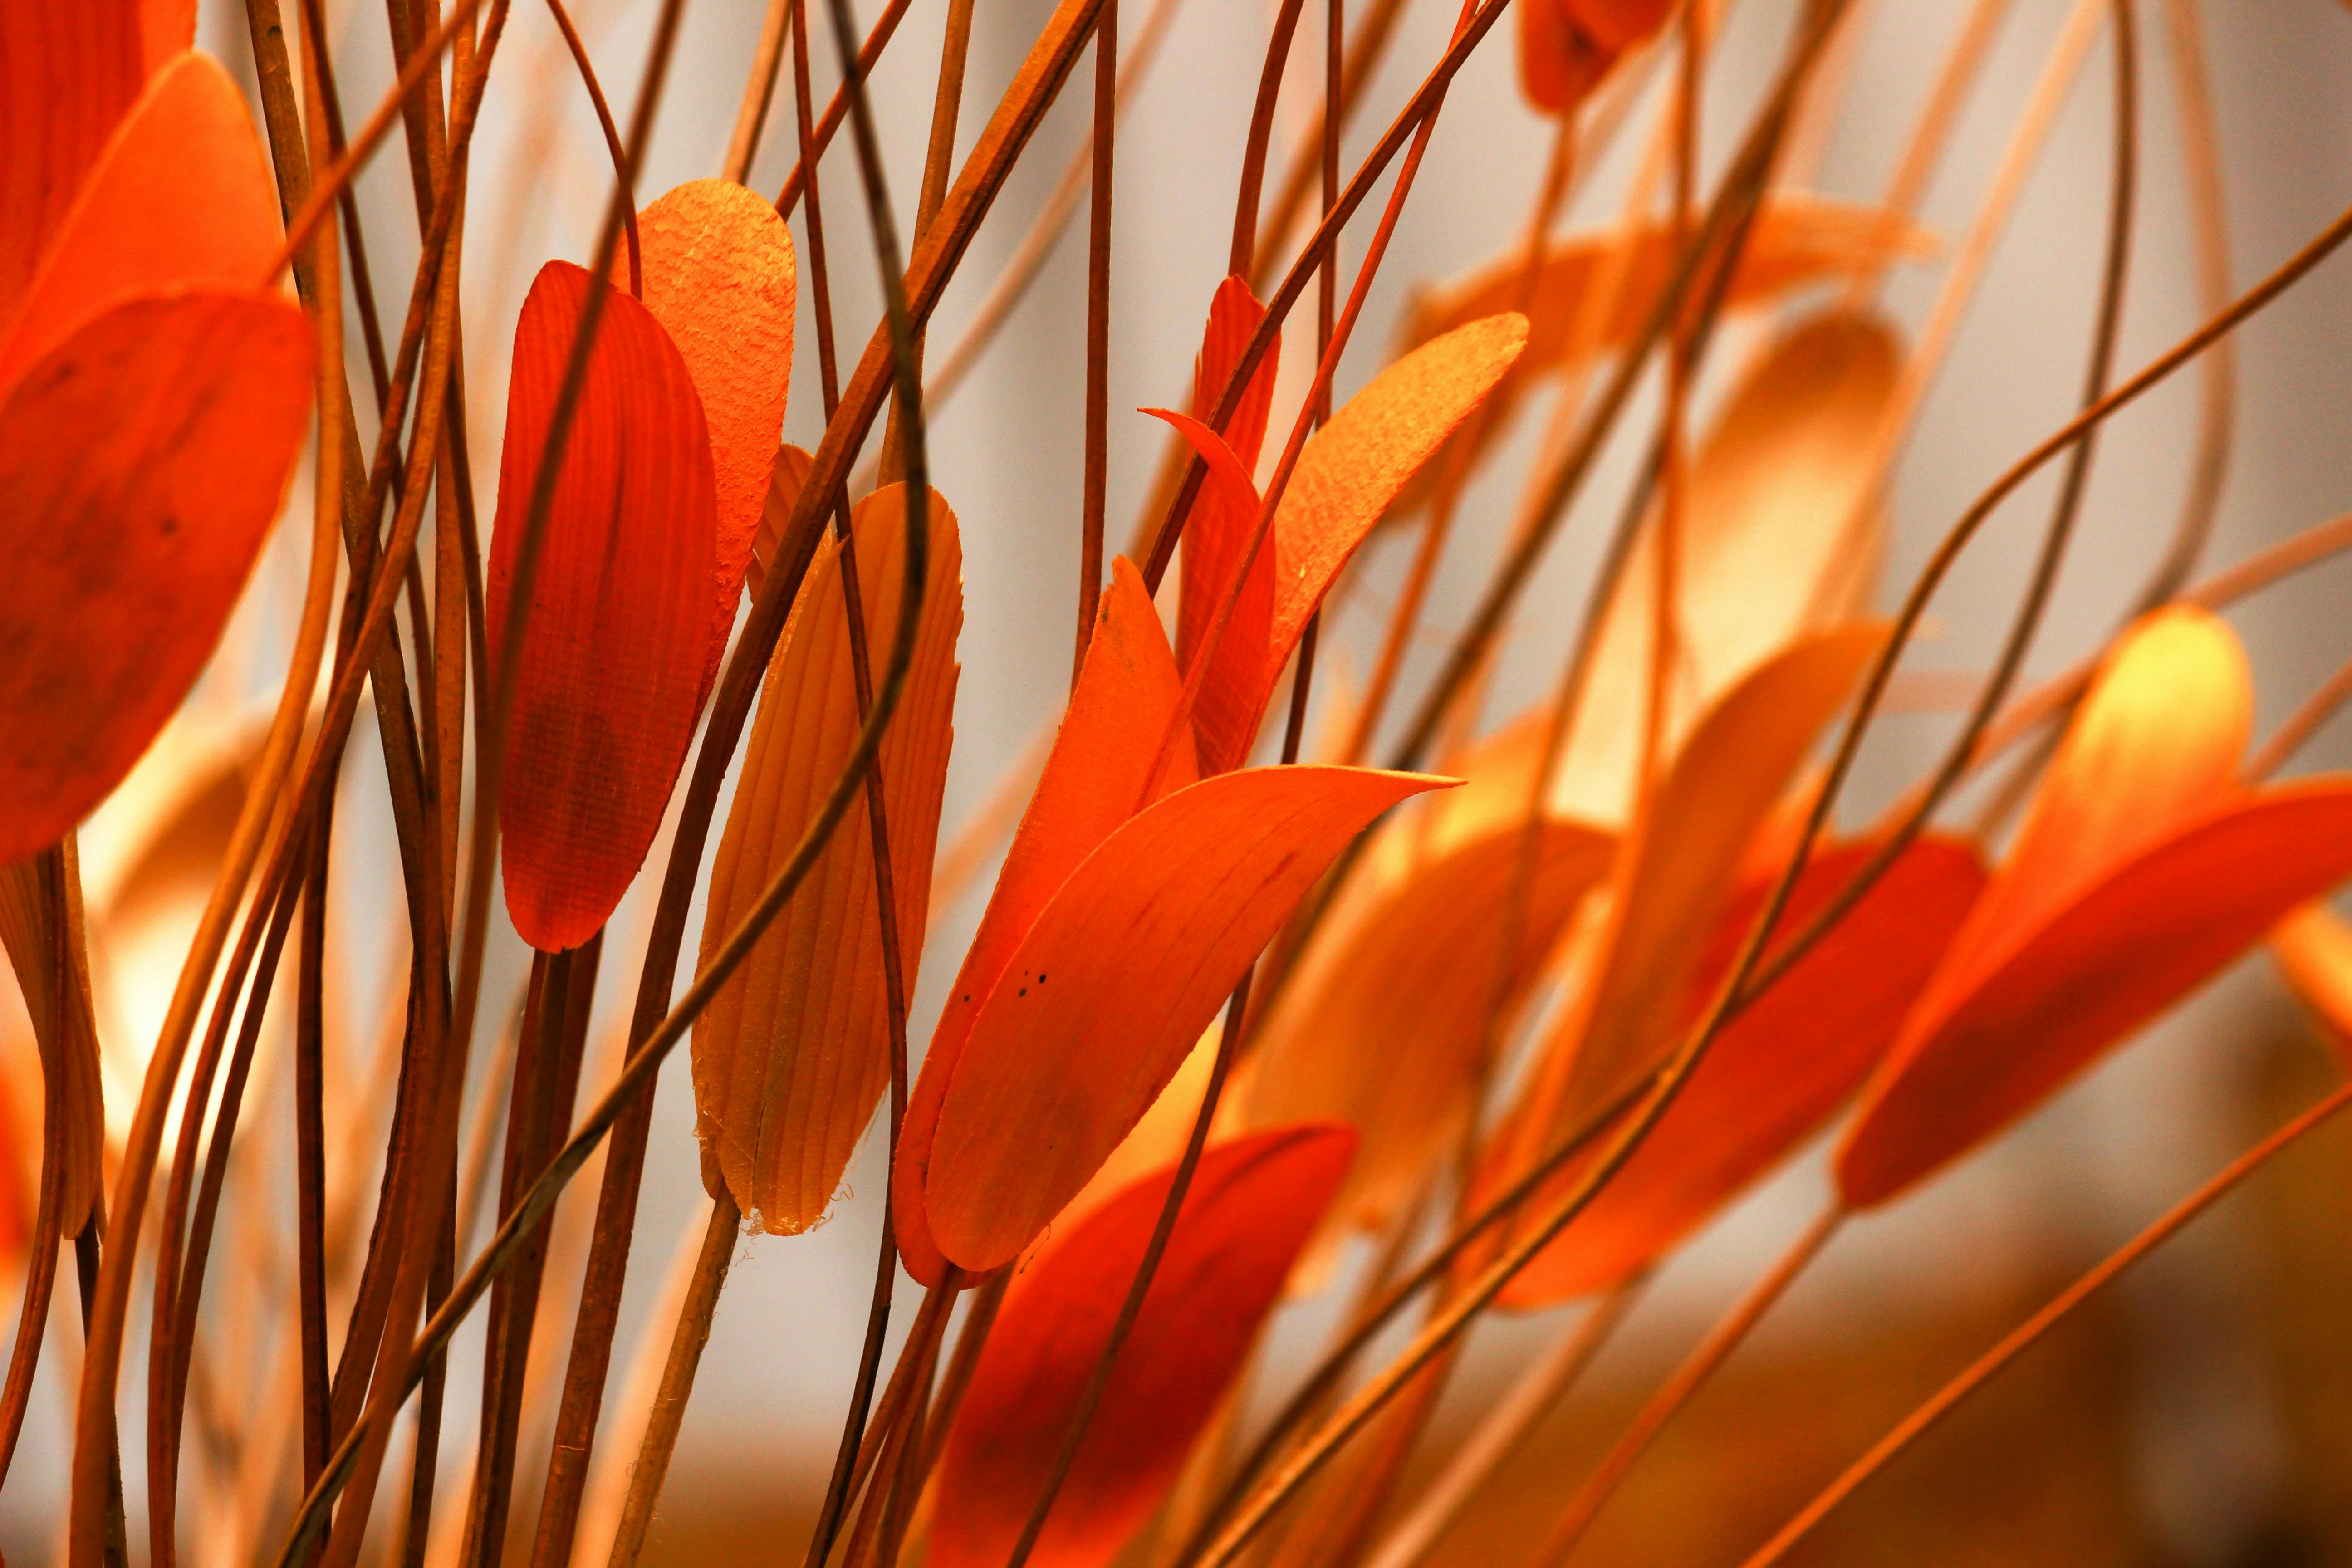 orange flower backgrounds